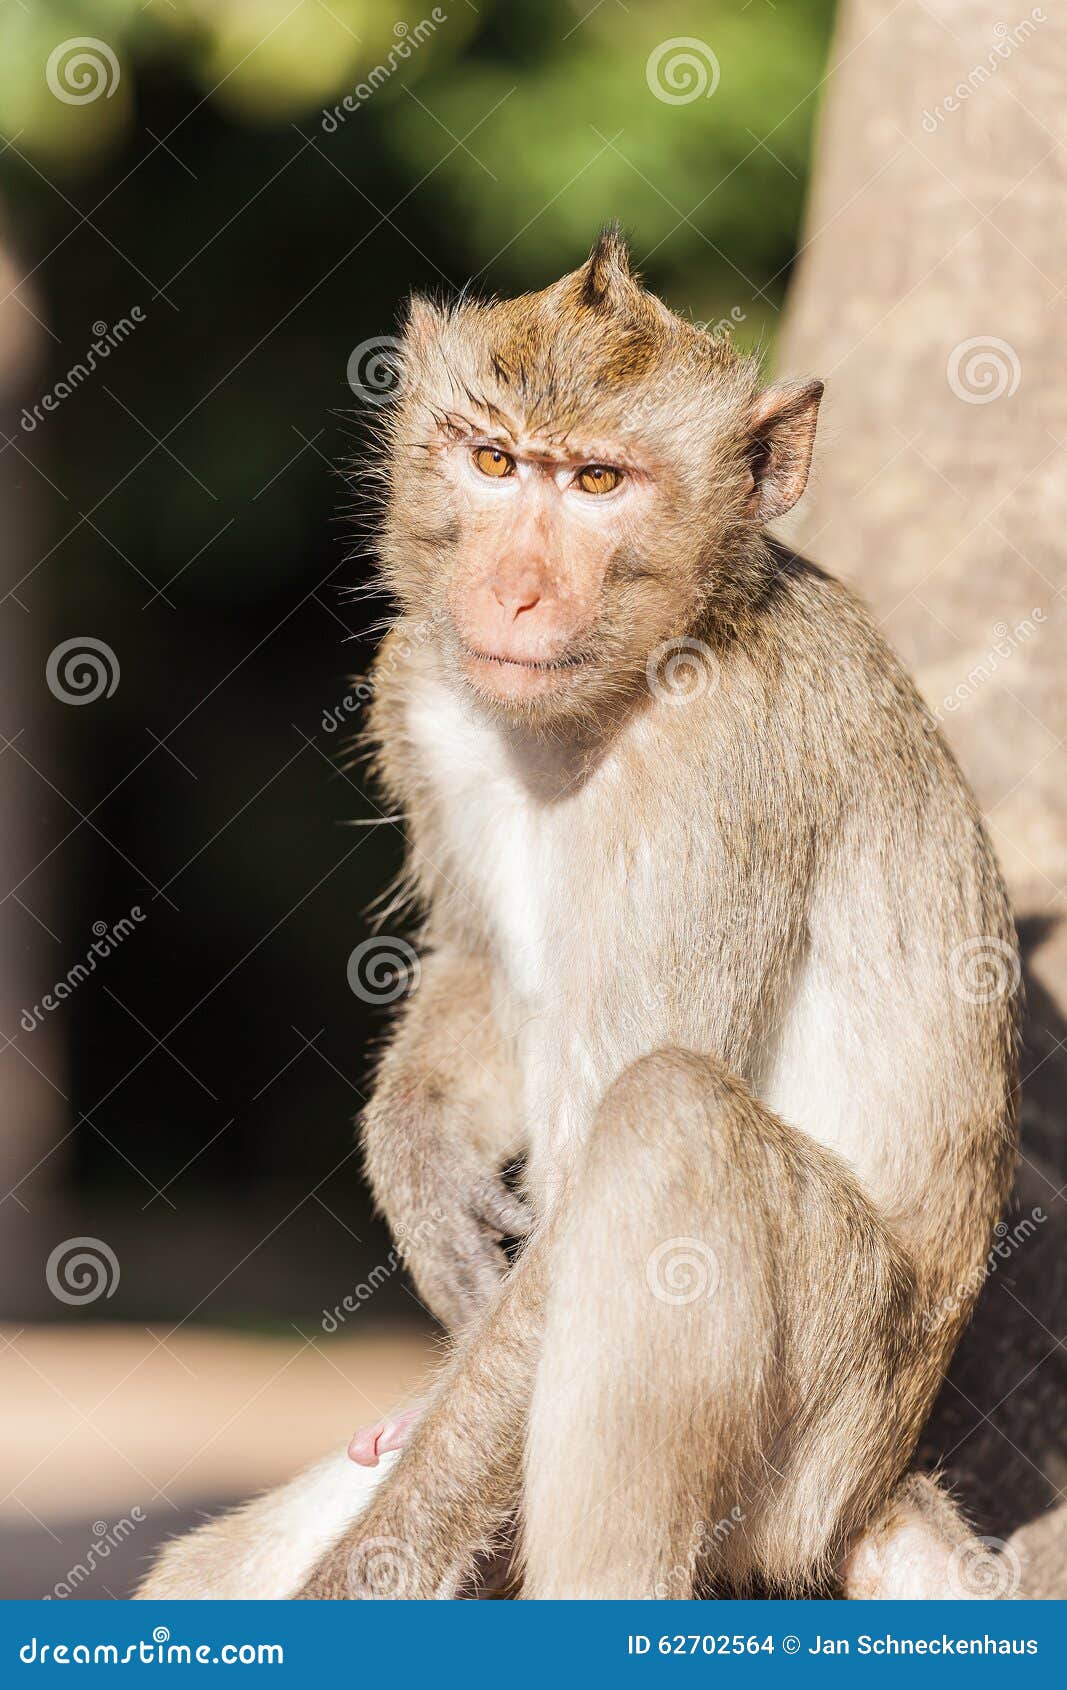 Male Monkey Penis Stock Photos